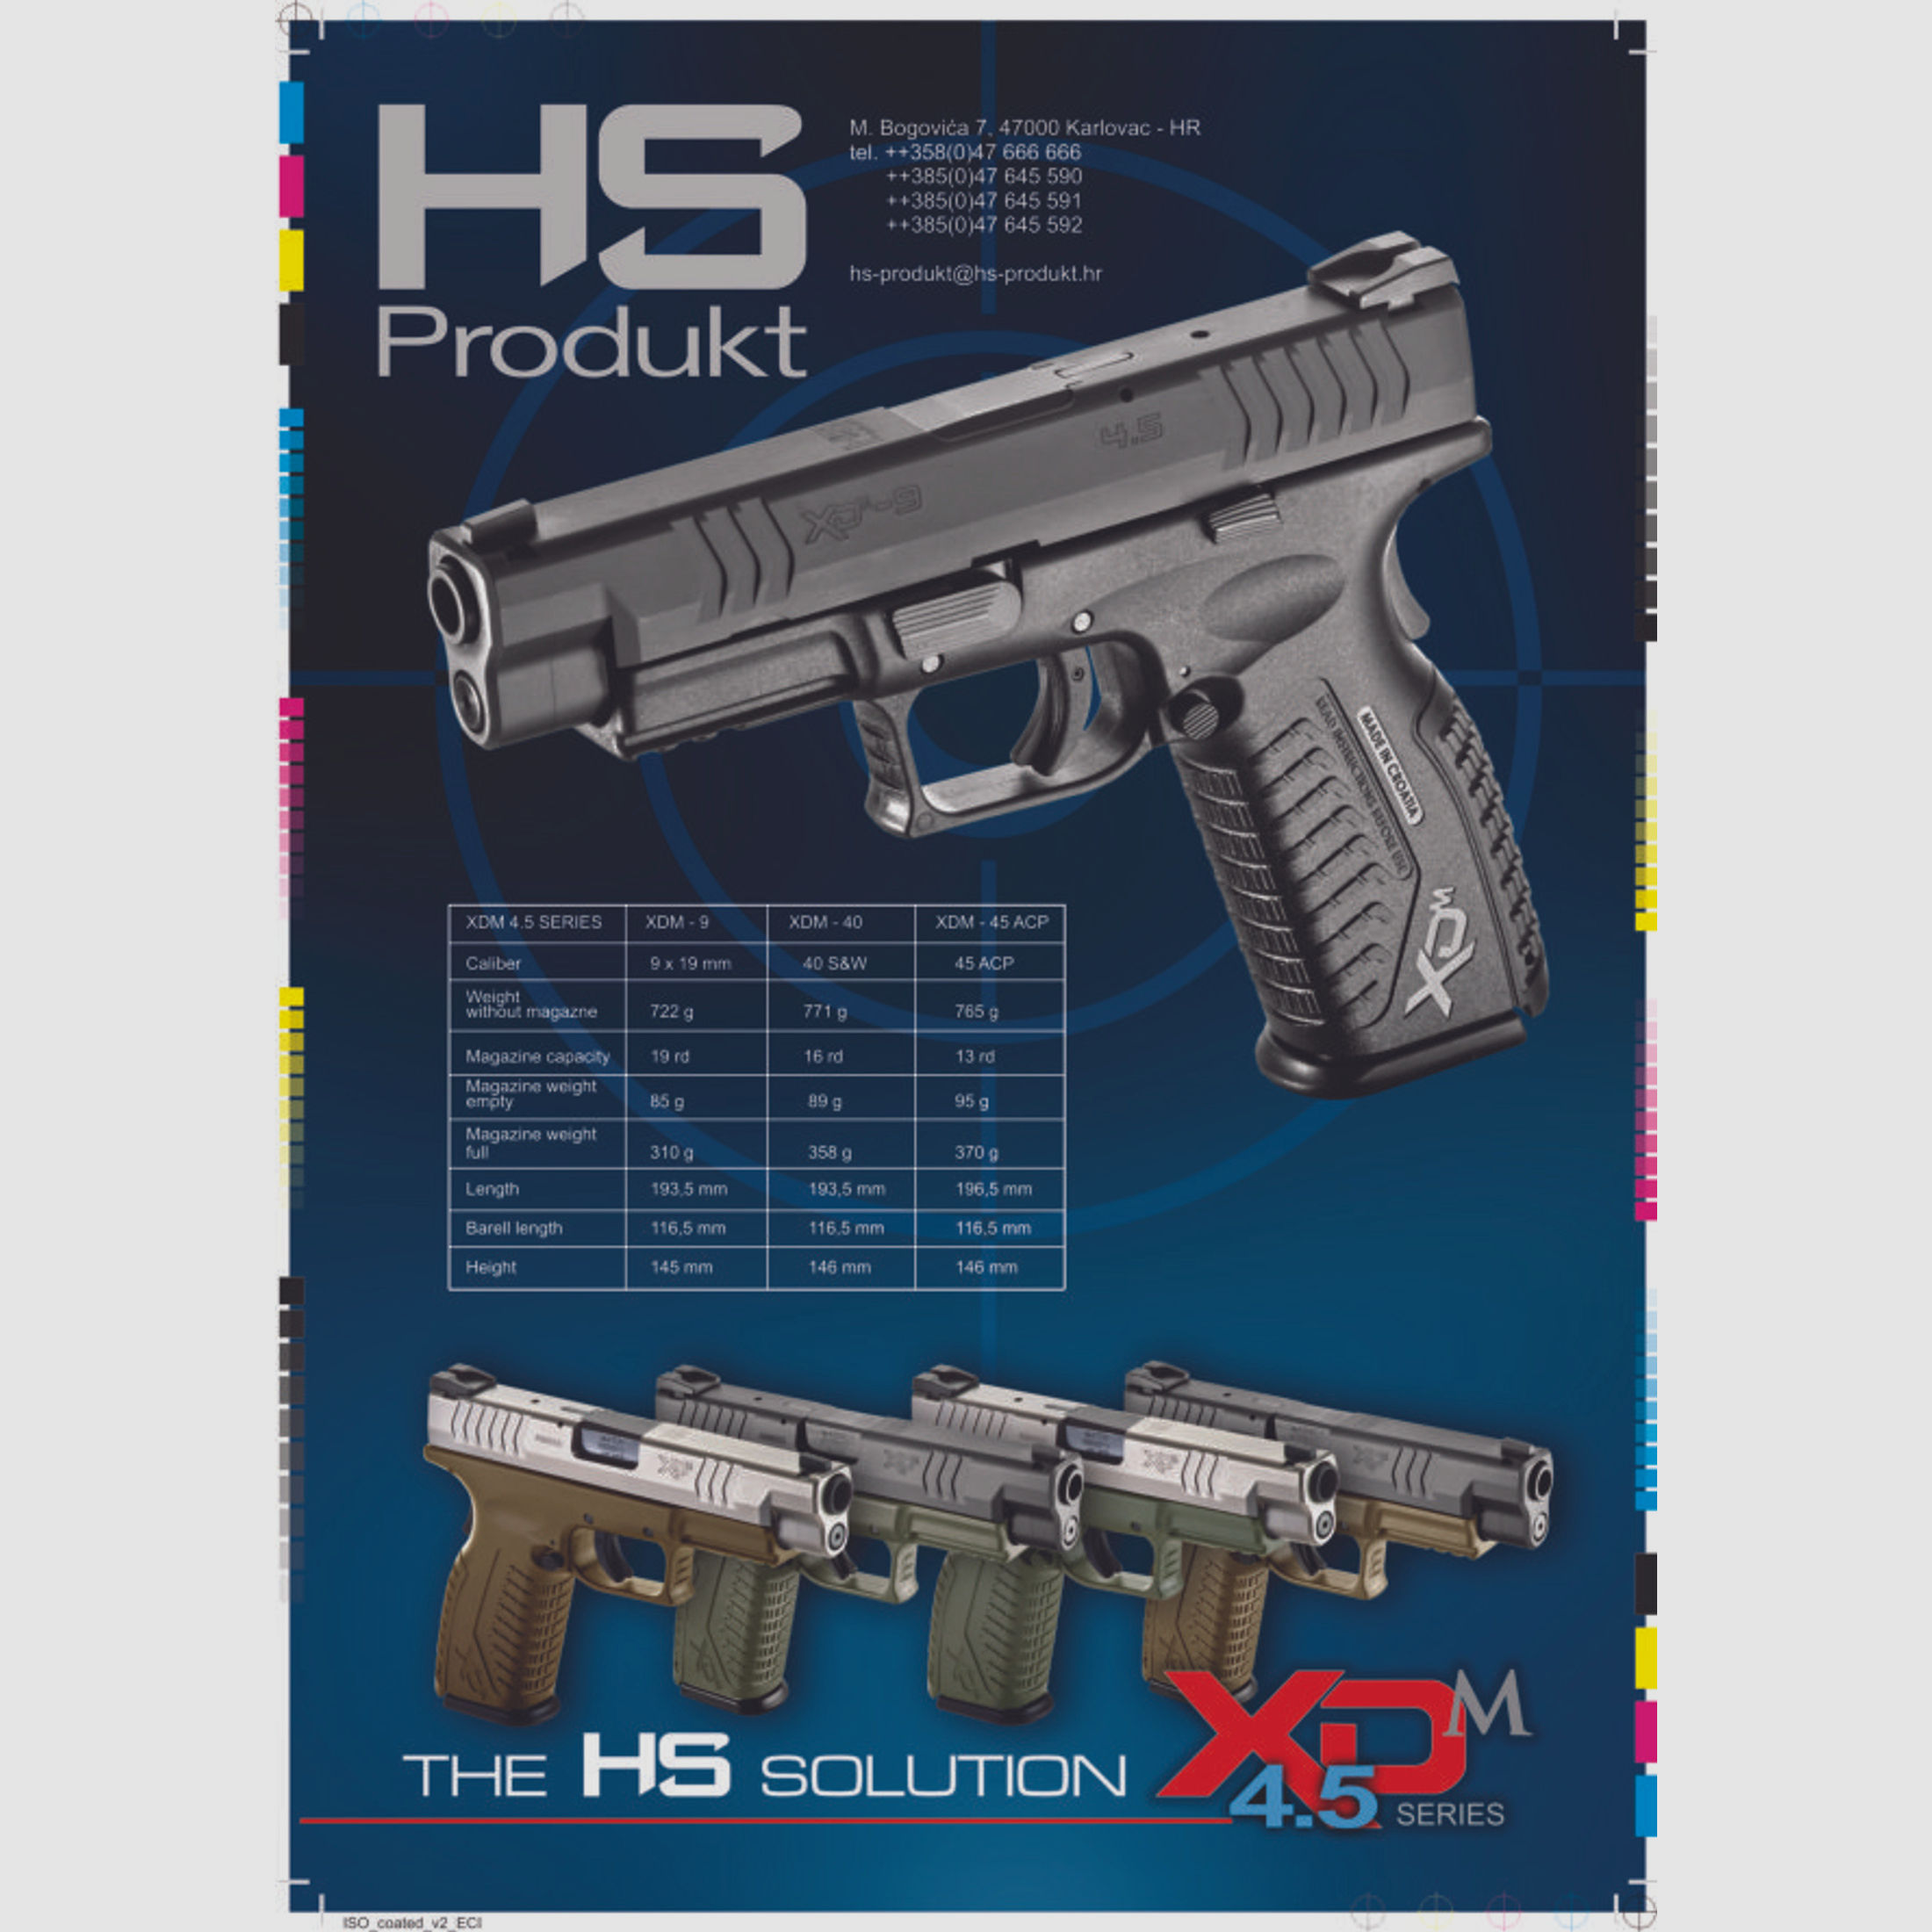 HS Produkt	 XDM-40 4.5 cal .40 S&W